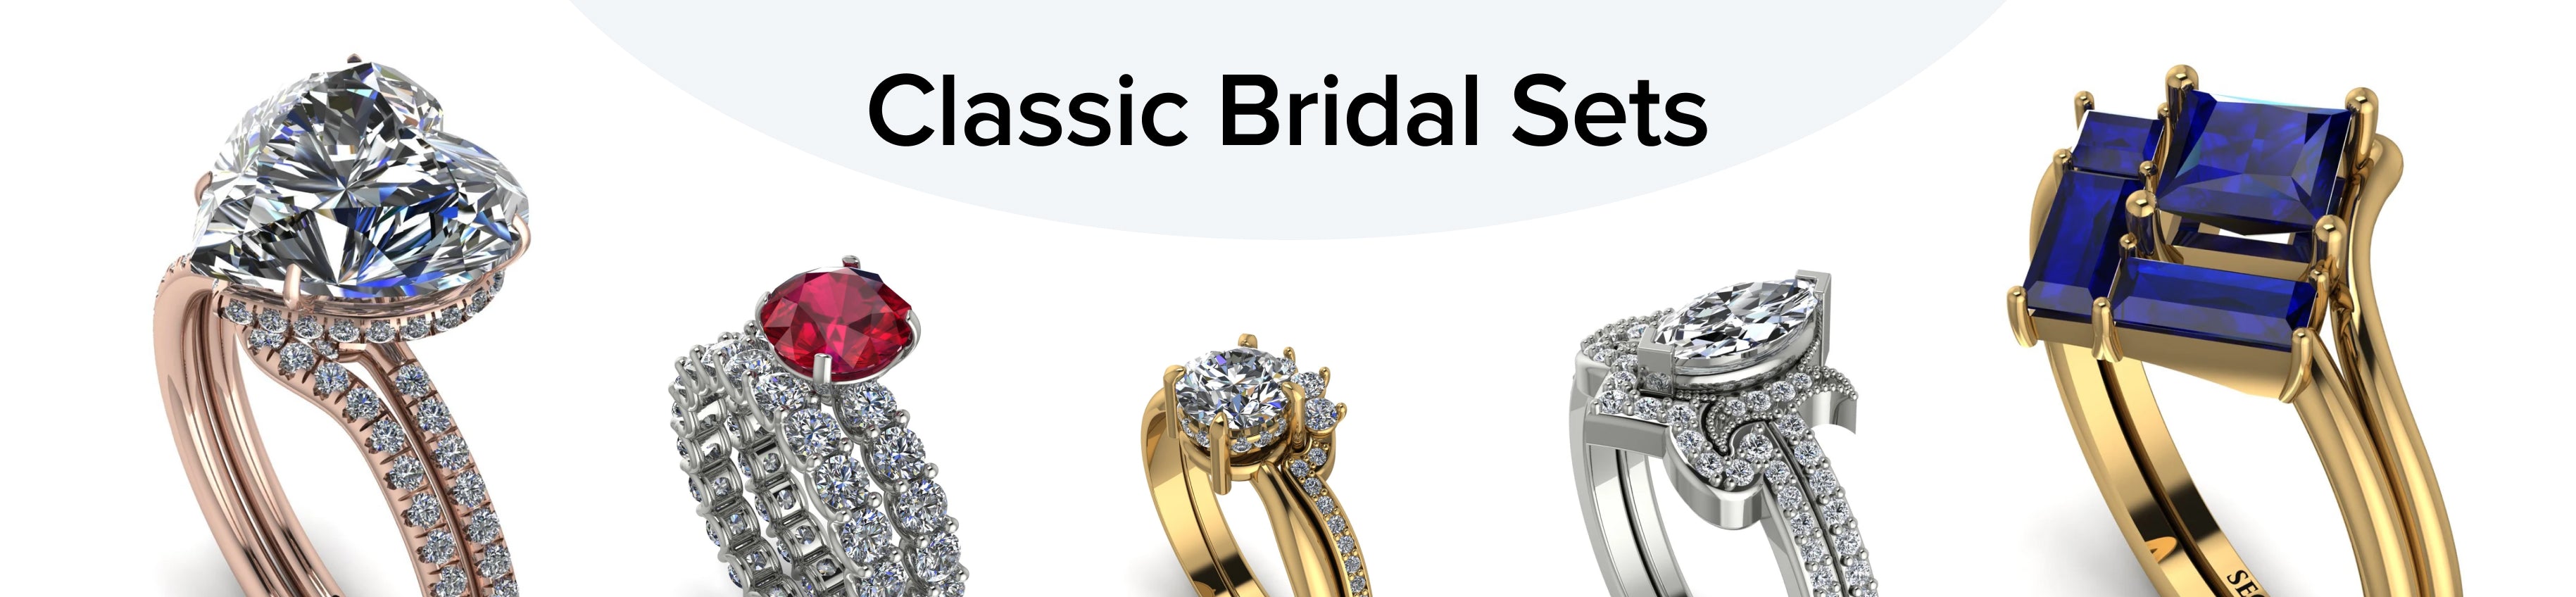 Classic Bridal Sets Banner